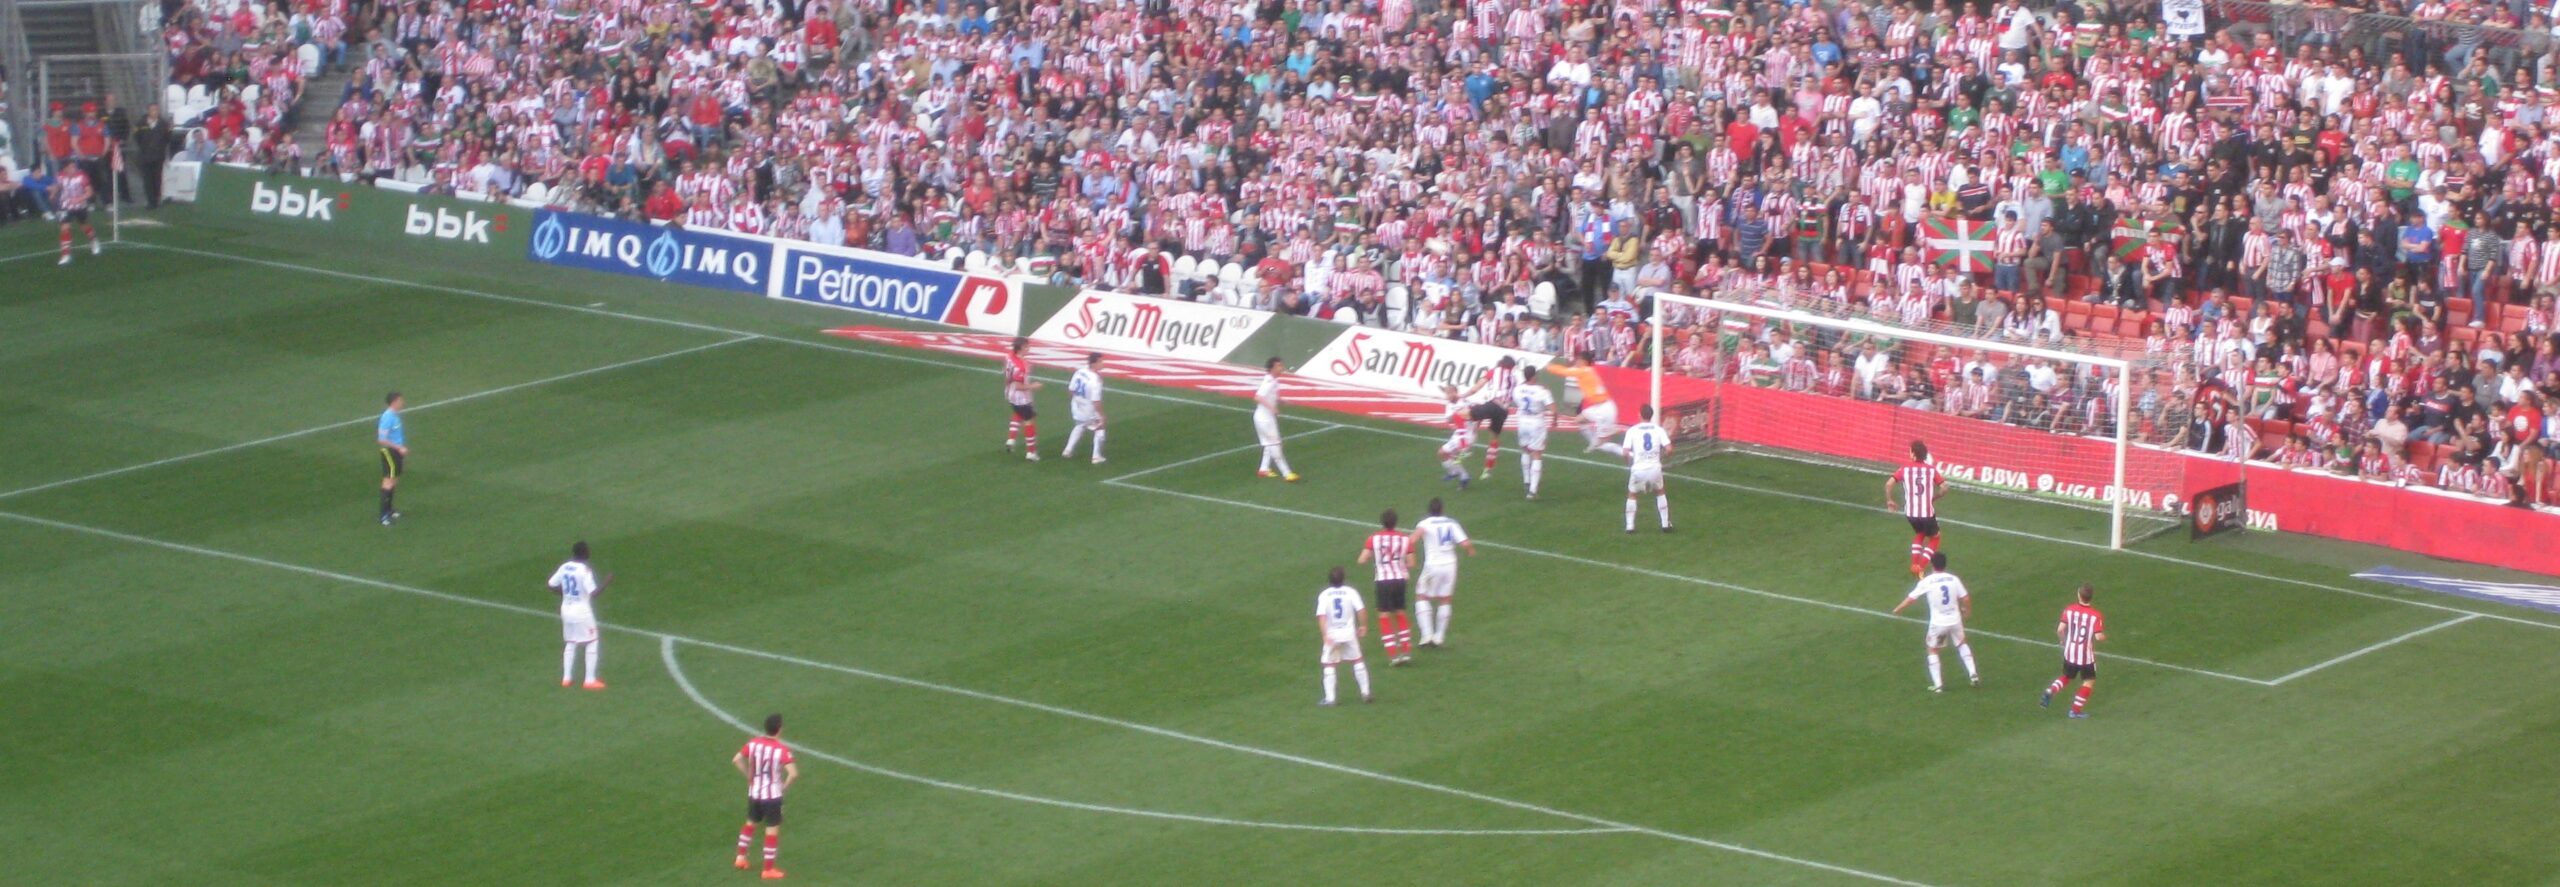 Athletic Club de Bilbao match action